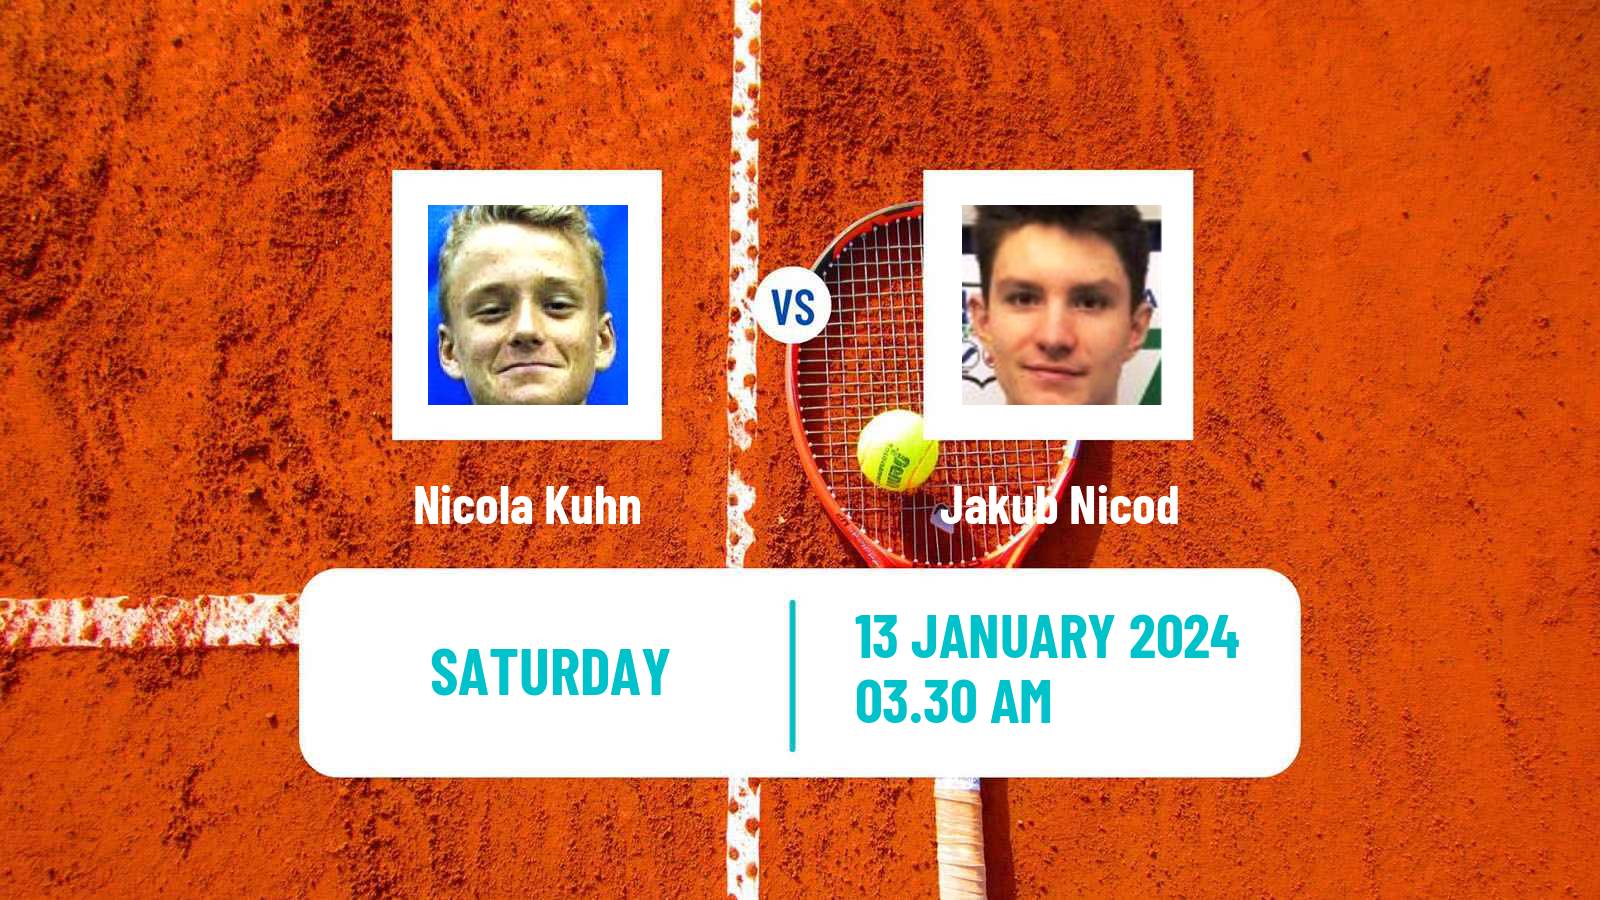 Tennis ITF M15 Monastir 2 Men Nicola Kuhn - Jakub Nicod